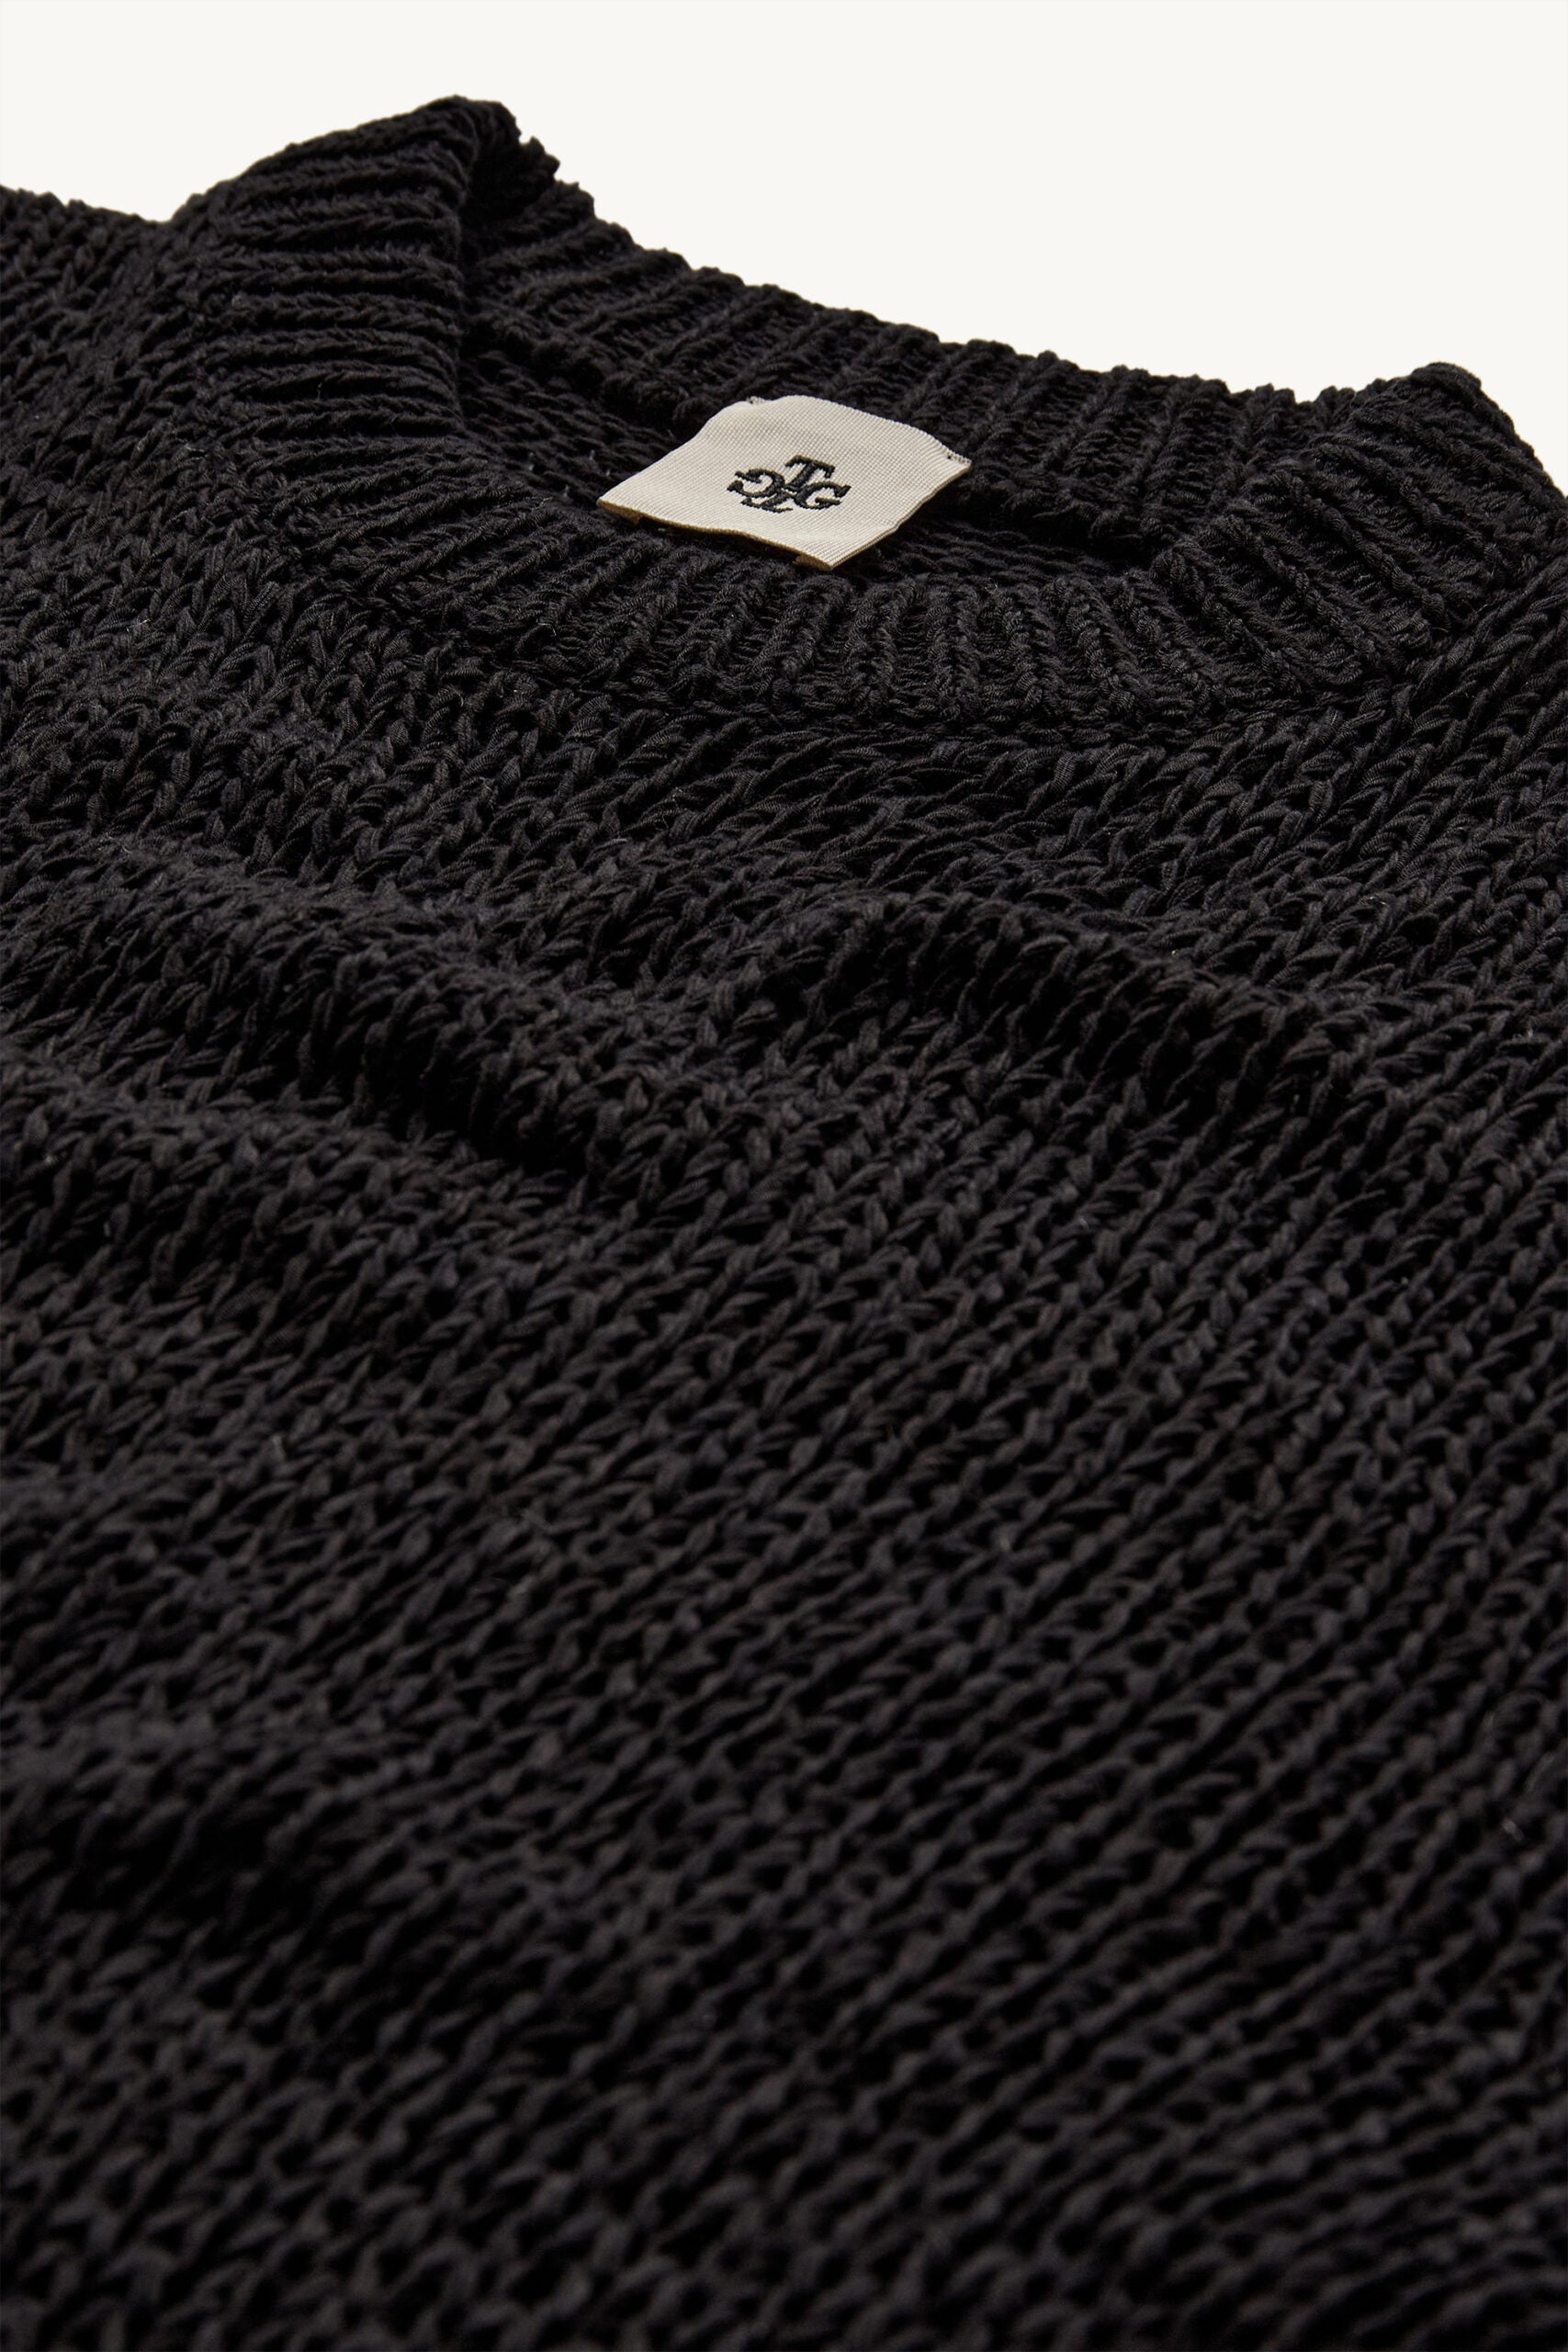 The Garment Literno Sweater in Black